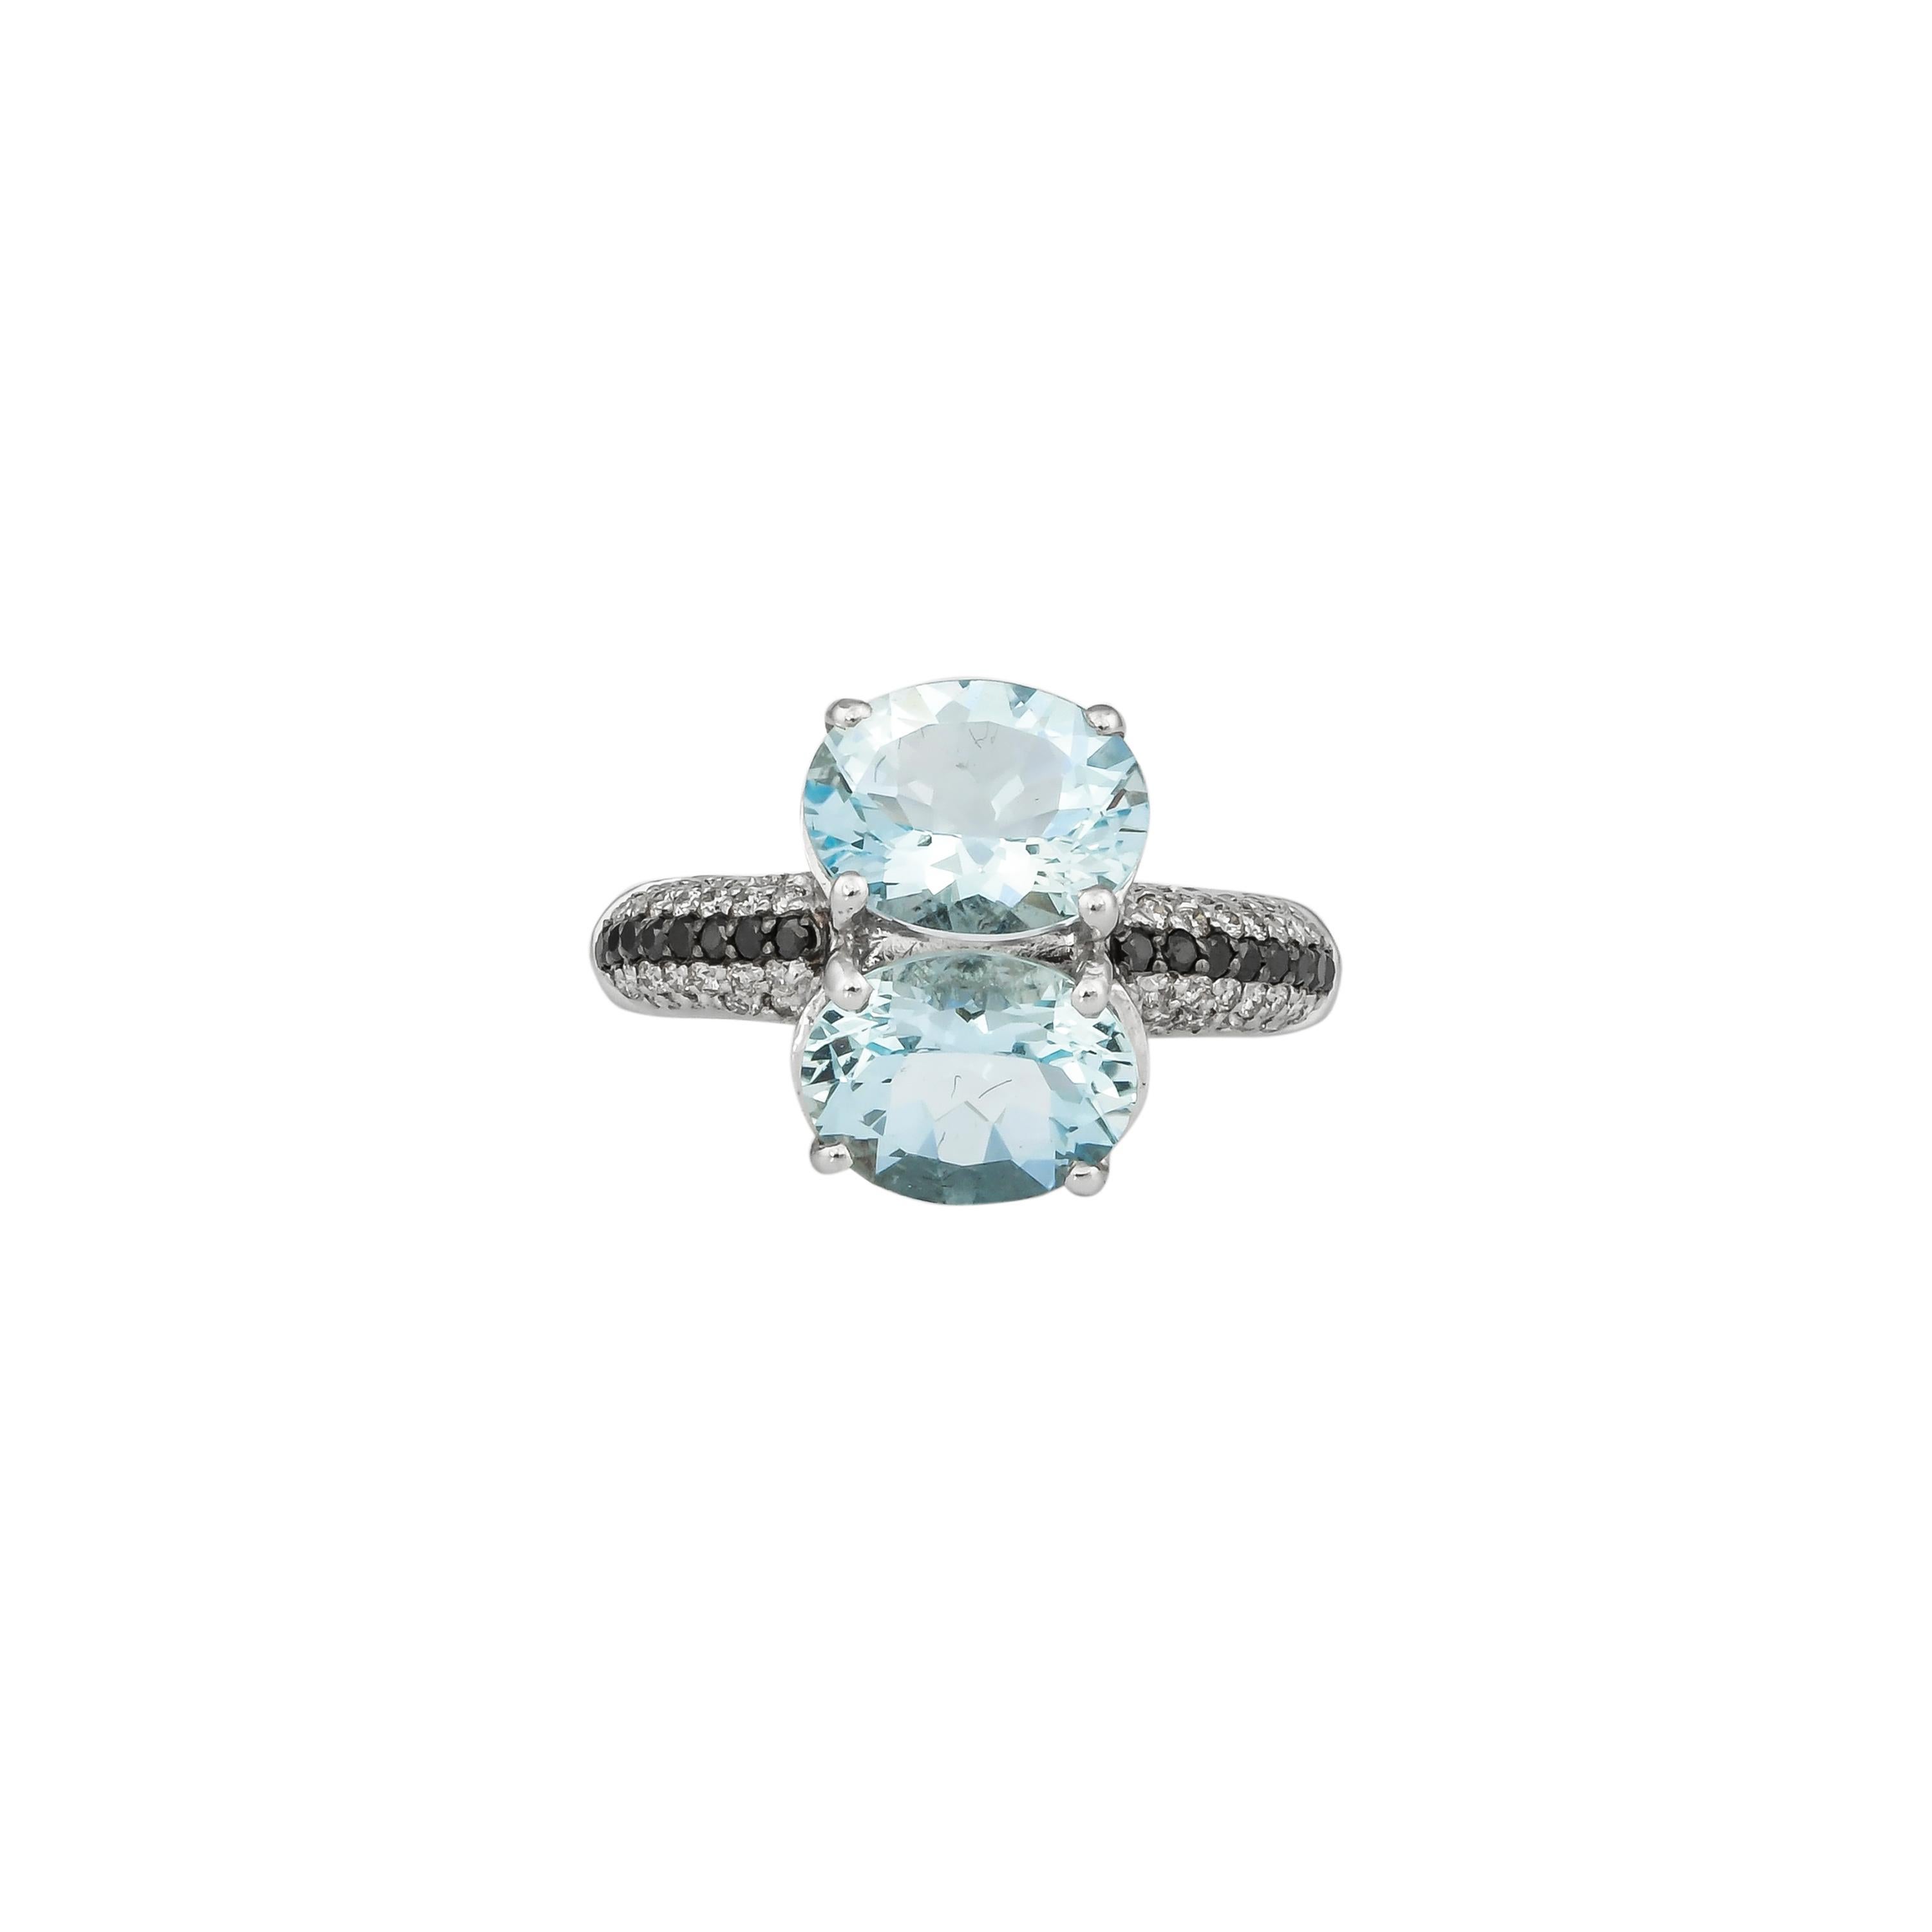 Contemporary 3.2 Carat Aquamarine and Diamond Ring in 14 Karat White Gold For Sale